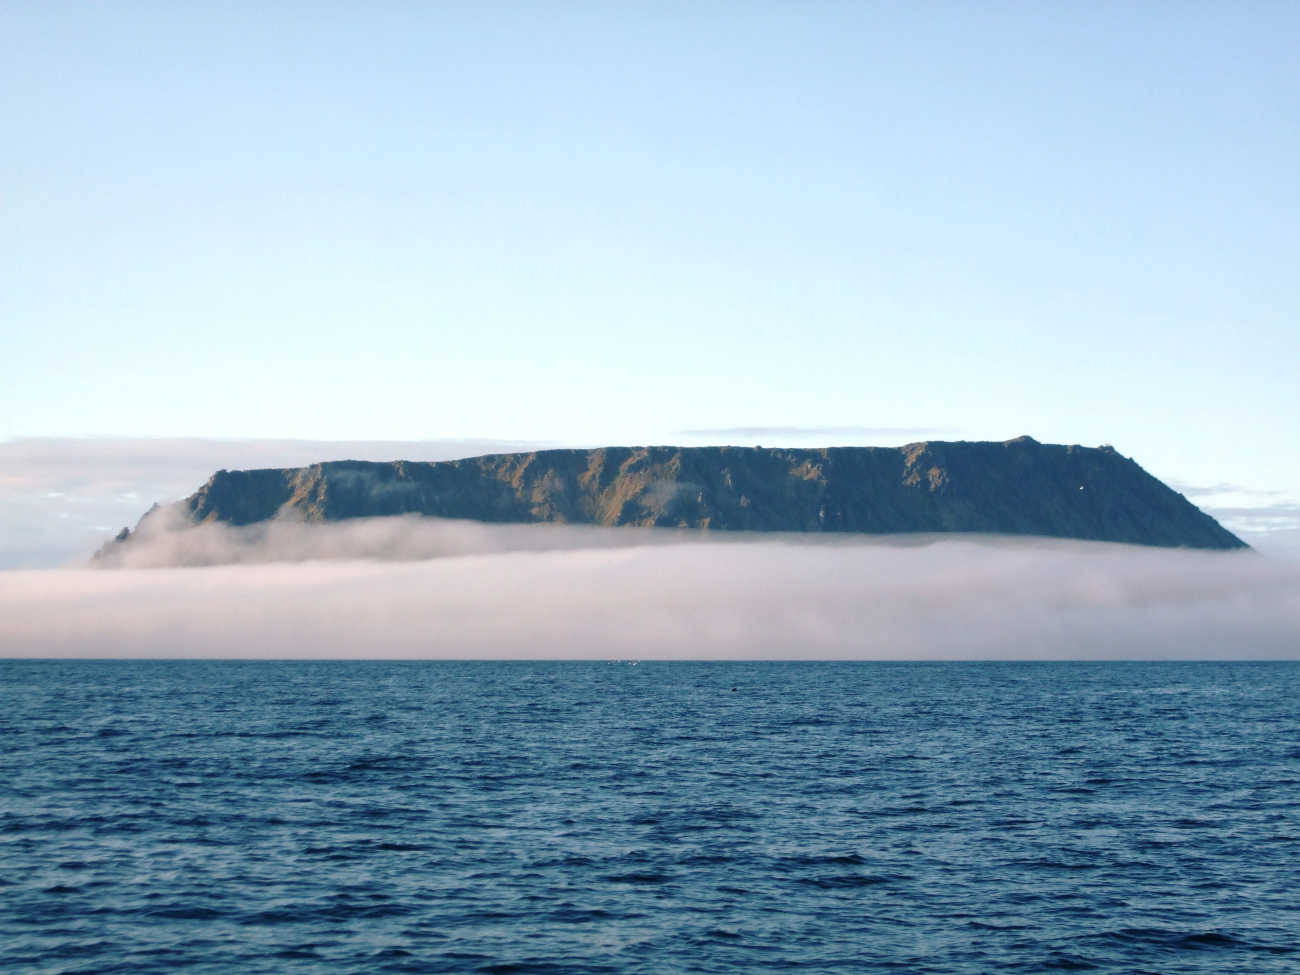 Fog obscuring the shoreline of Little Diomede Island